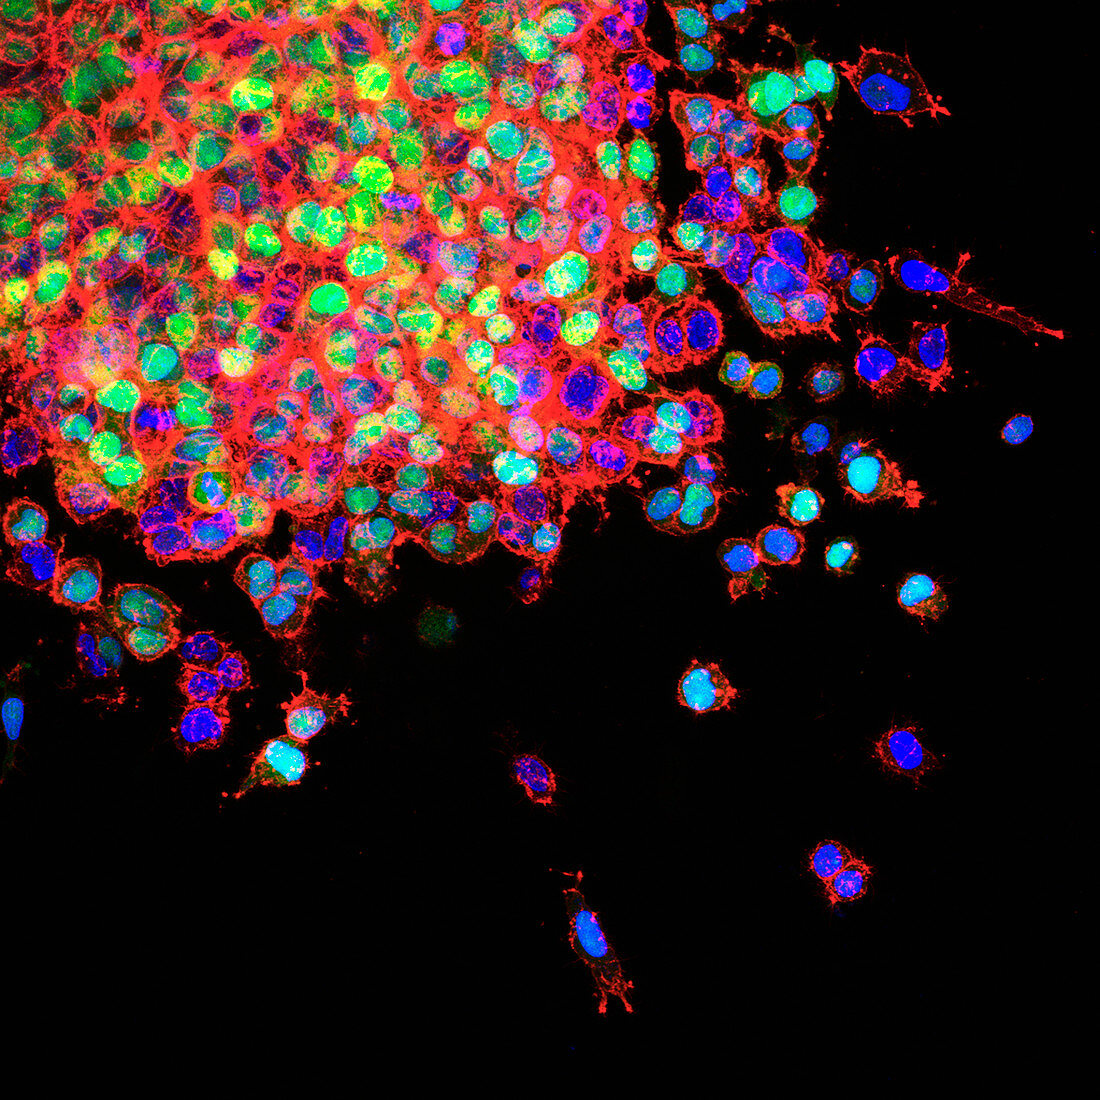 Lung cancer metastasis, light micrograph